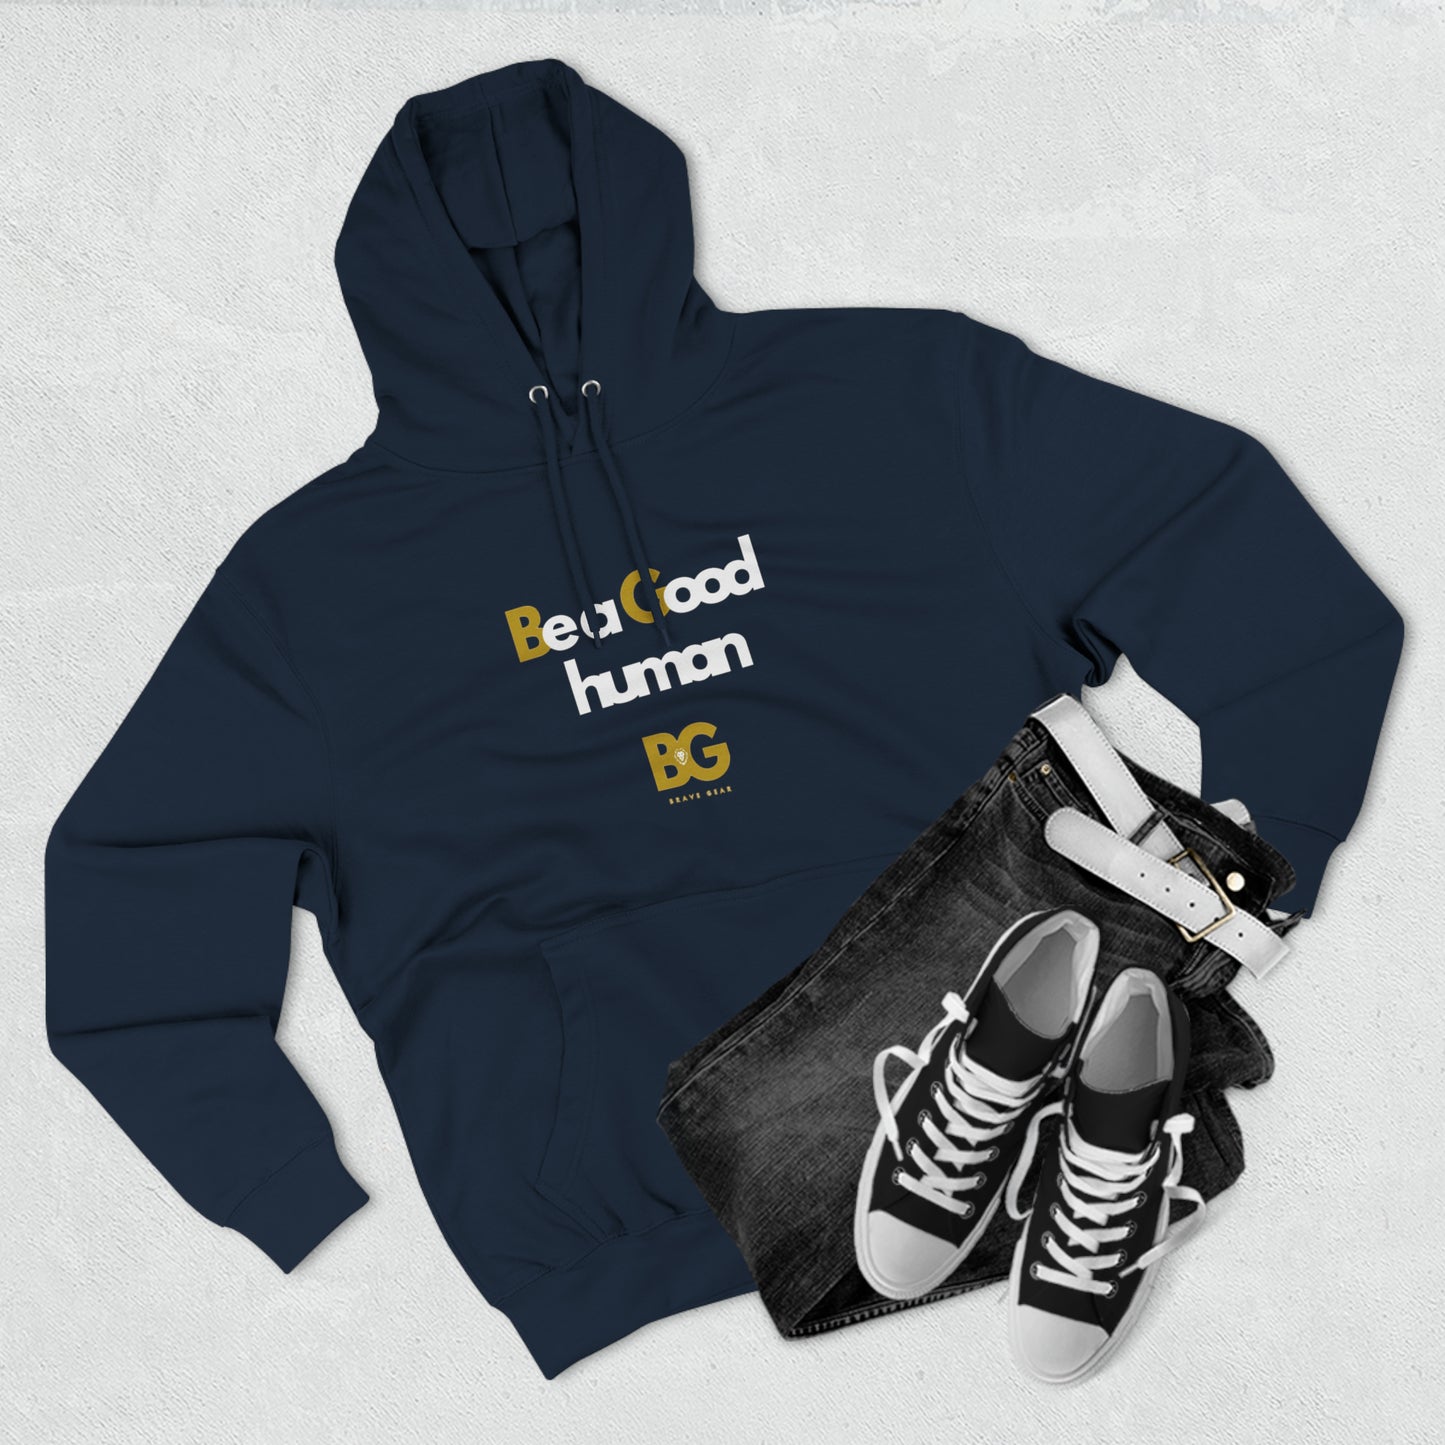 BG "Be a Good human" Premium Pullover Hoodie